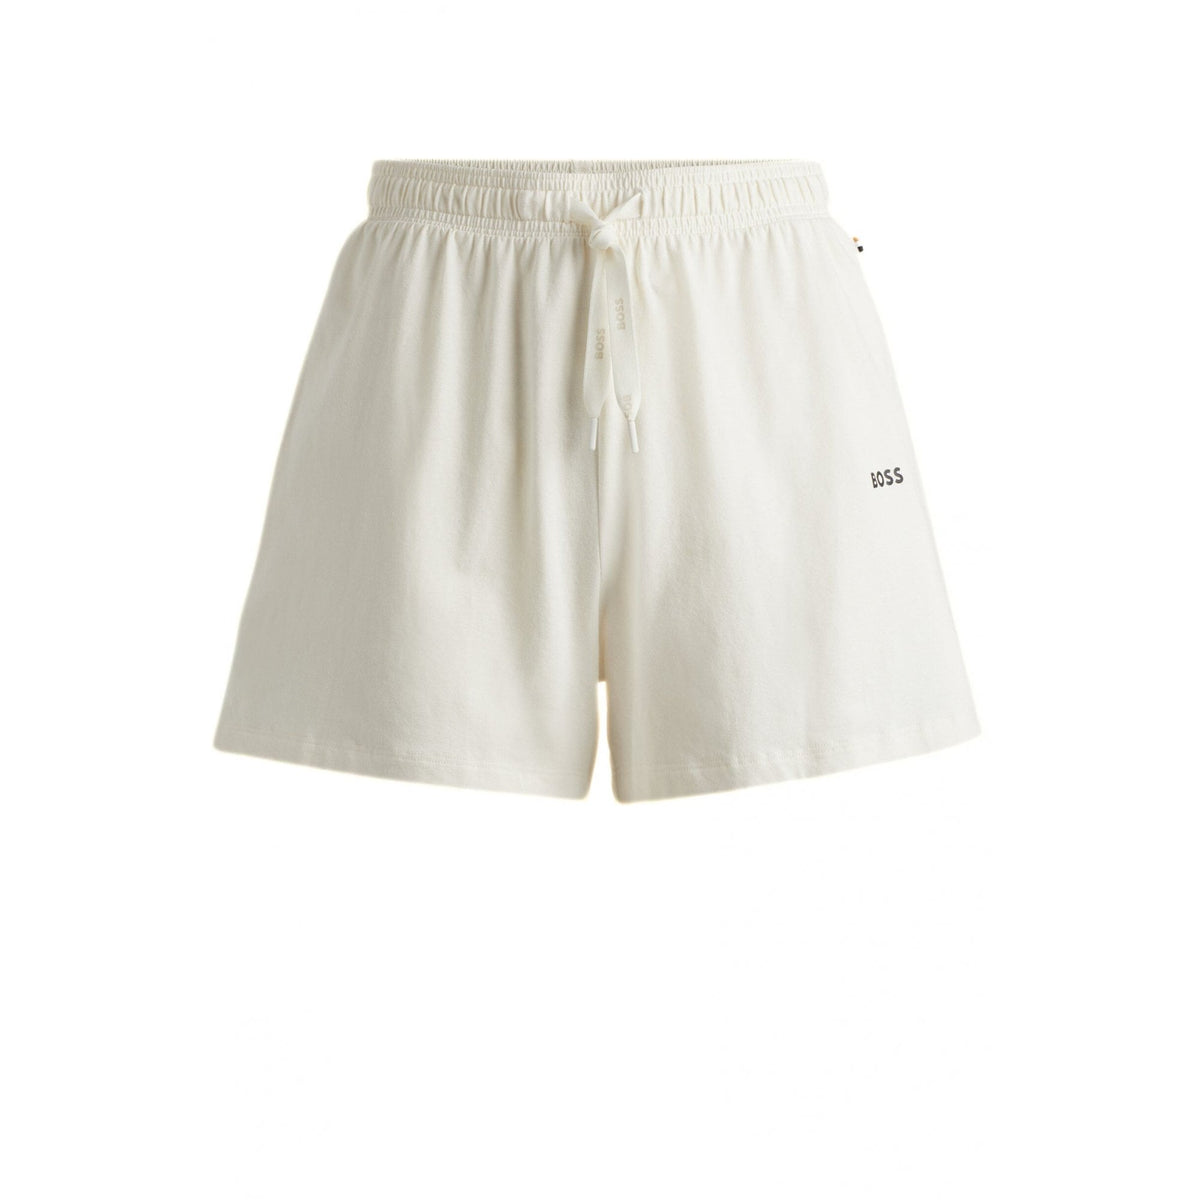 Luxuriöse Loungewear-Shorts aus Modal, offenes Weiß